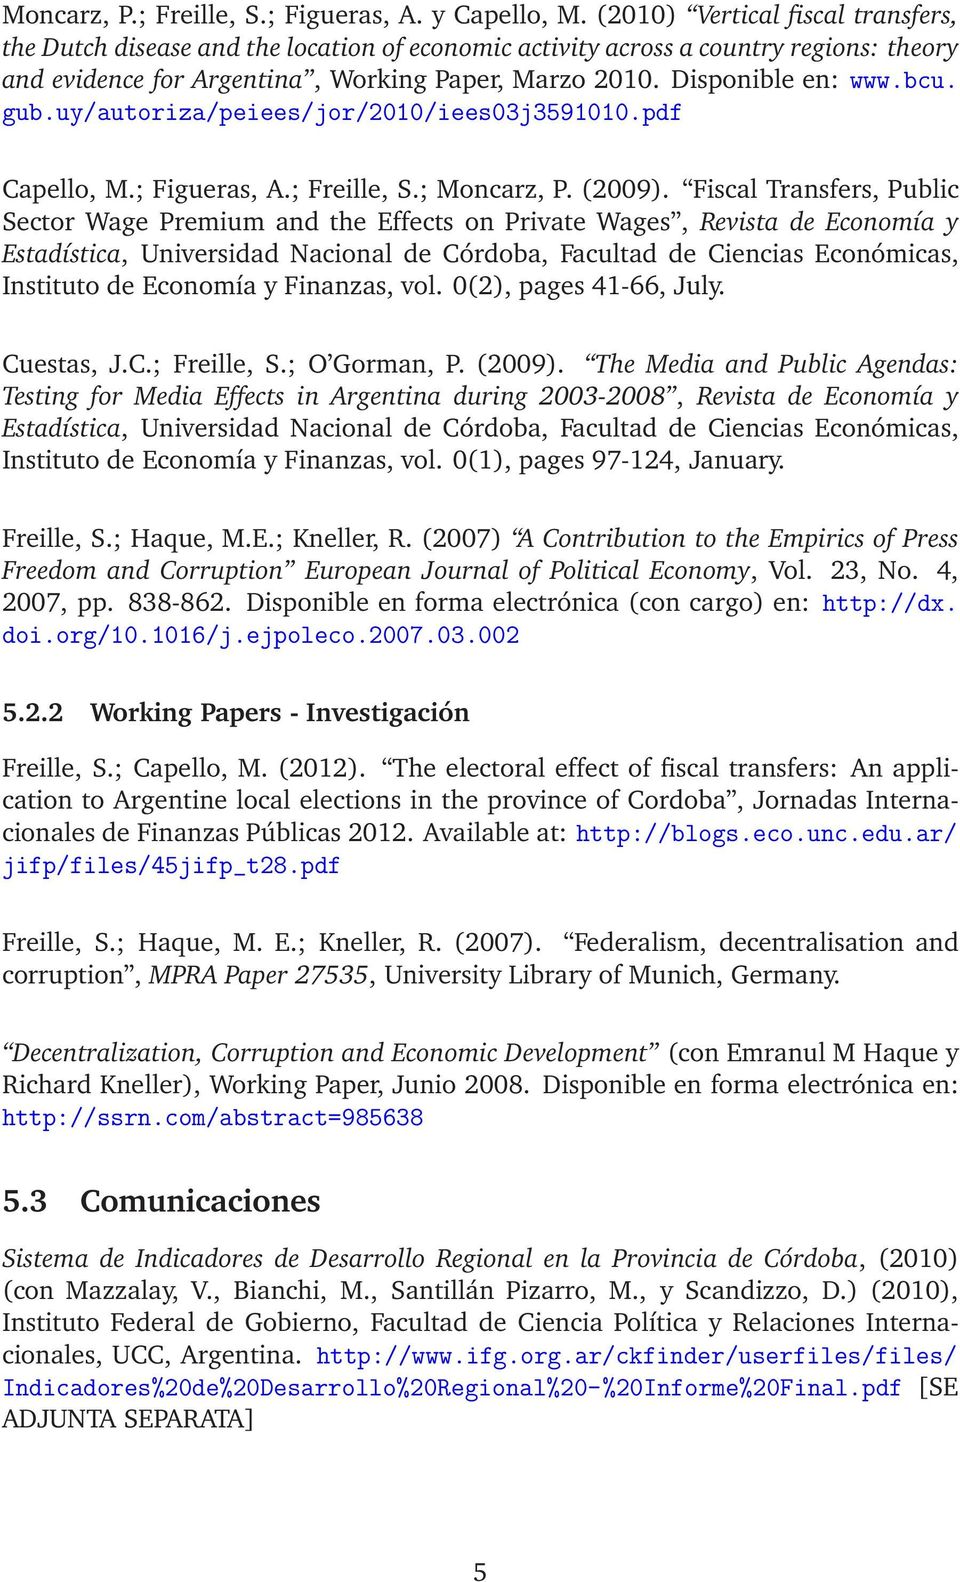 bcu. gub.uy/autoriza/peiees/jor/2010/iees03j3591010.pdf Capello, M.; Figueras, A.; Freille, S.; Moncarz, P. (2009).